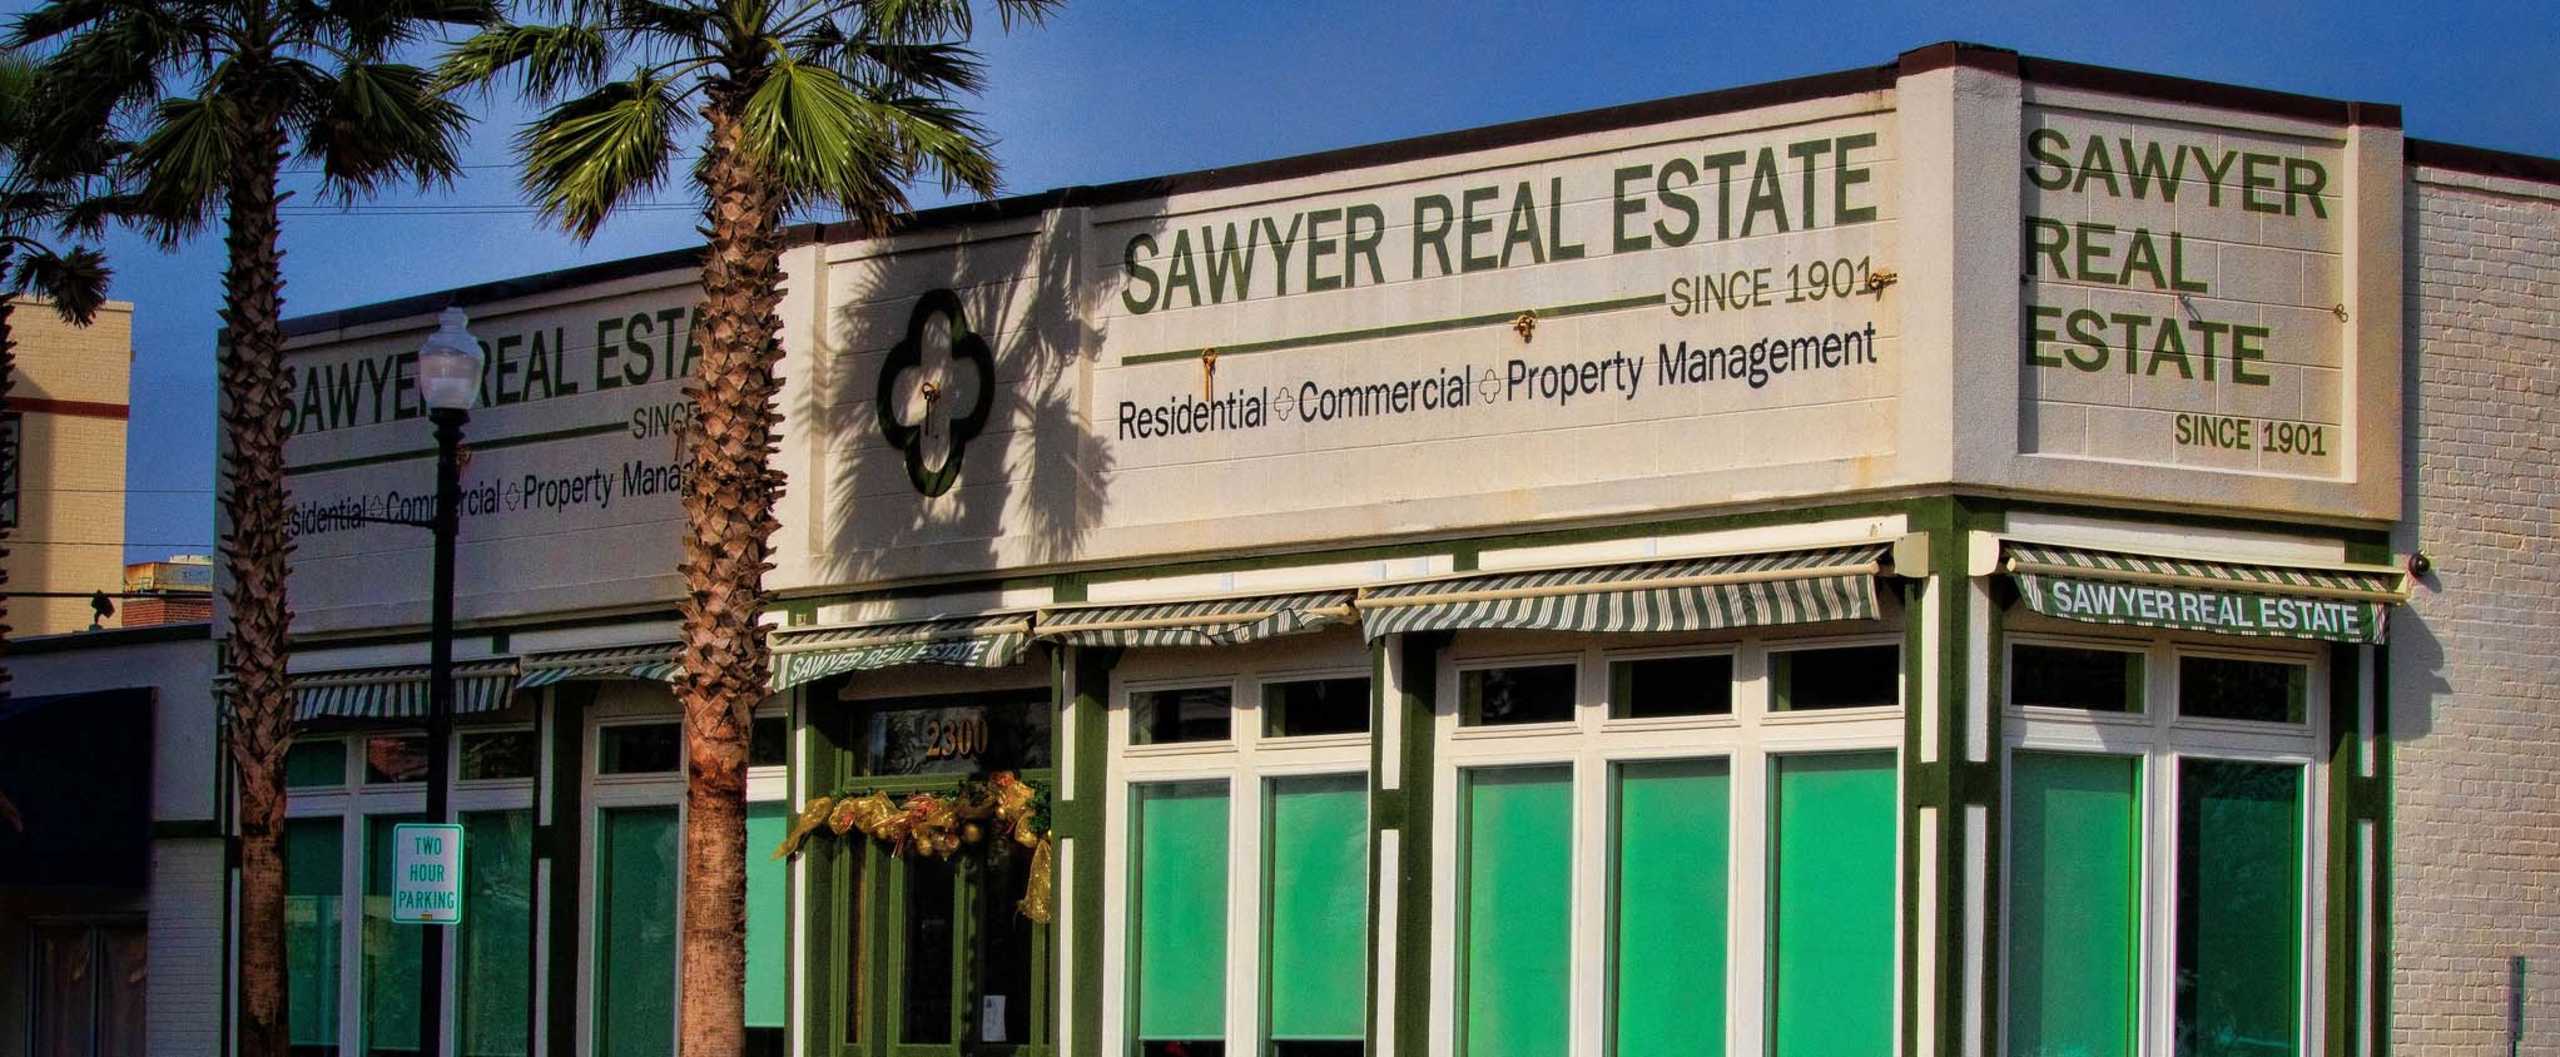 Sawyer Real Estate by JA Sawyer Imaging